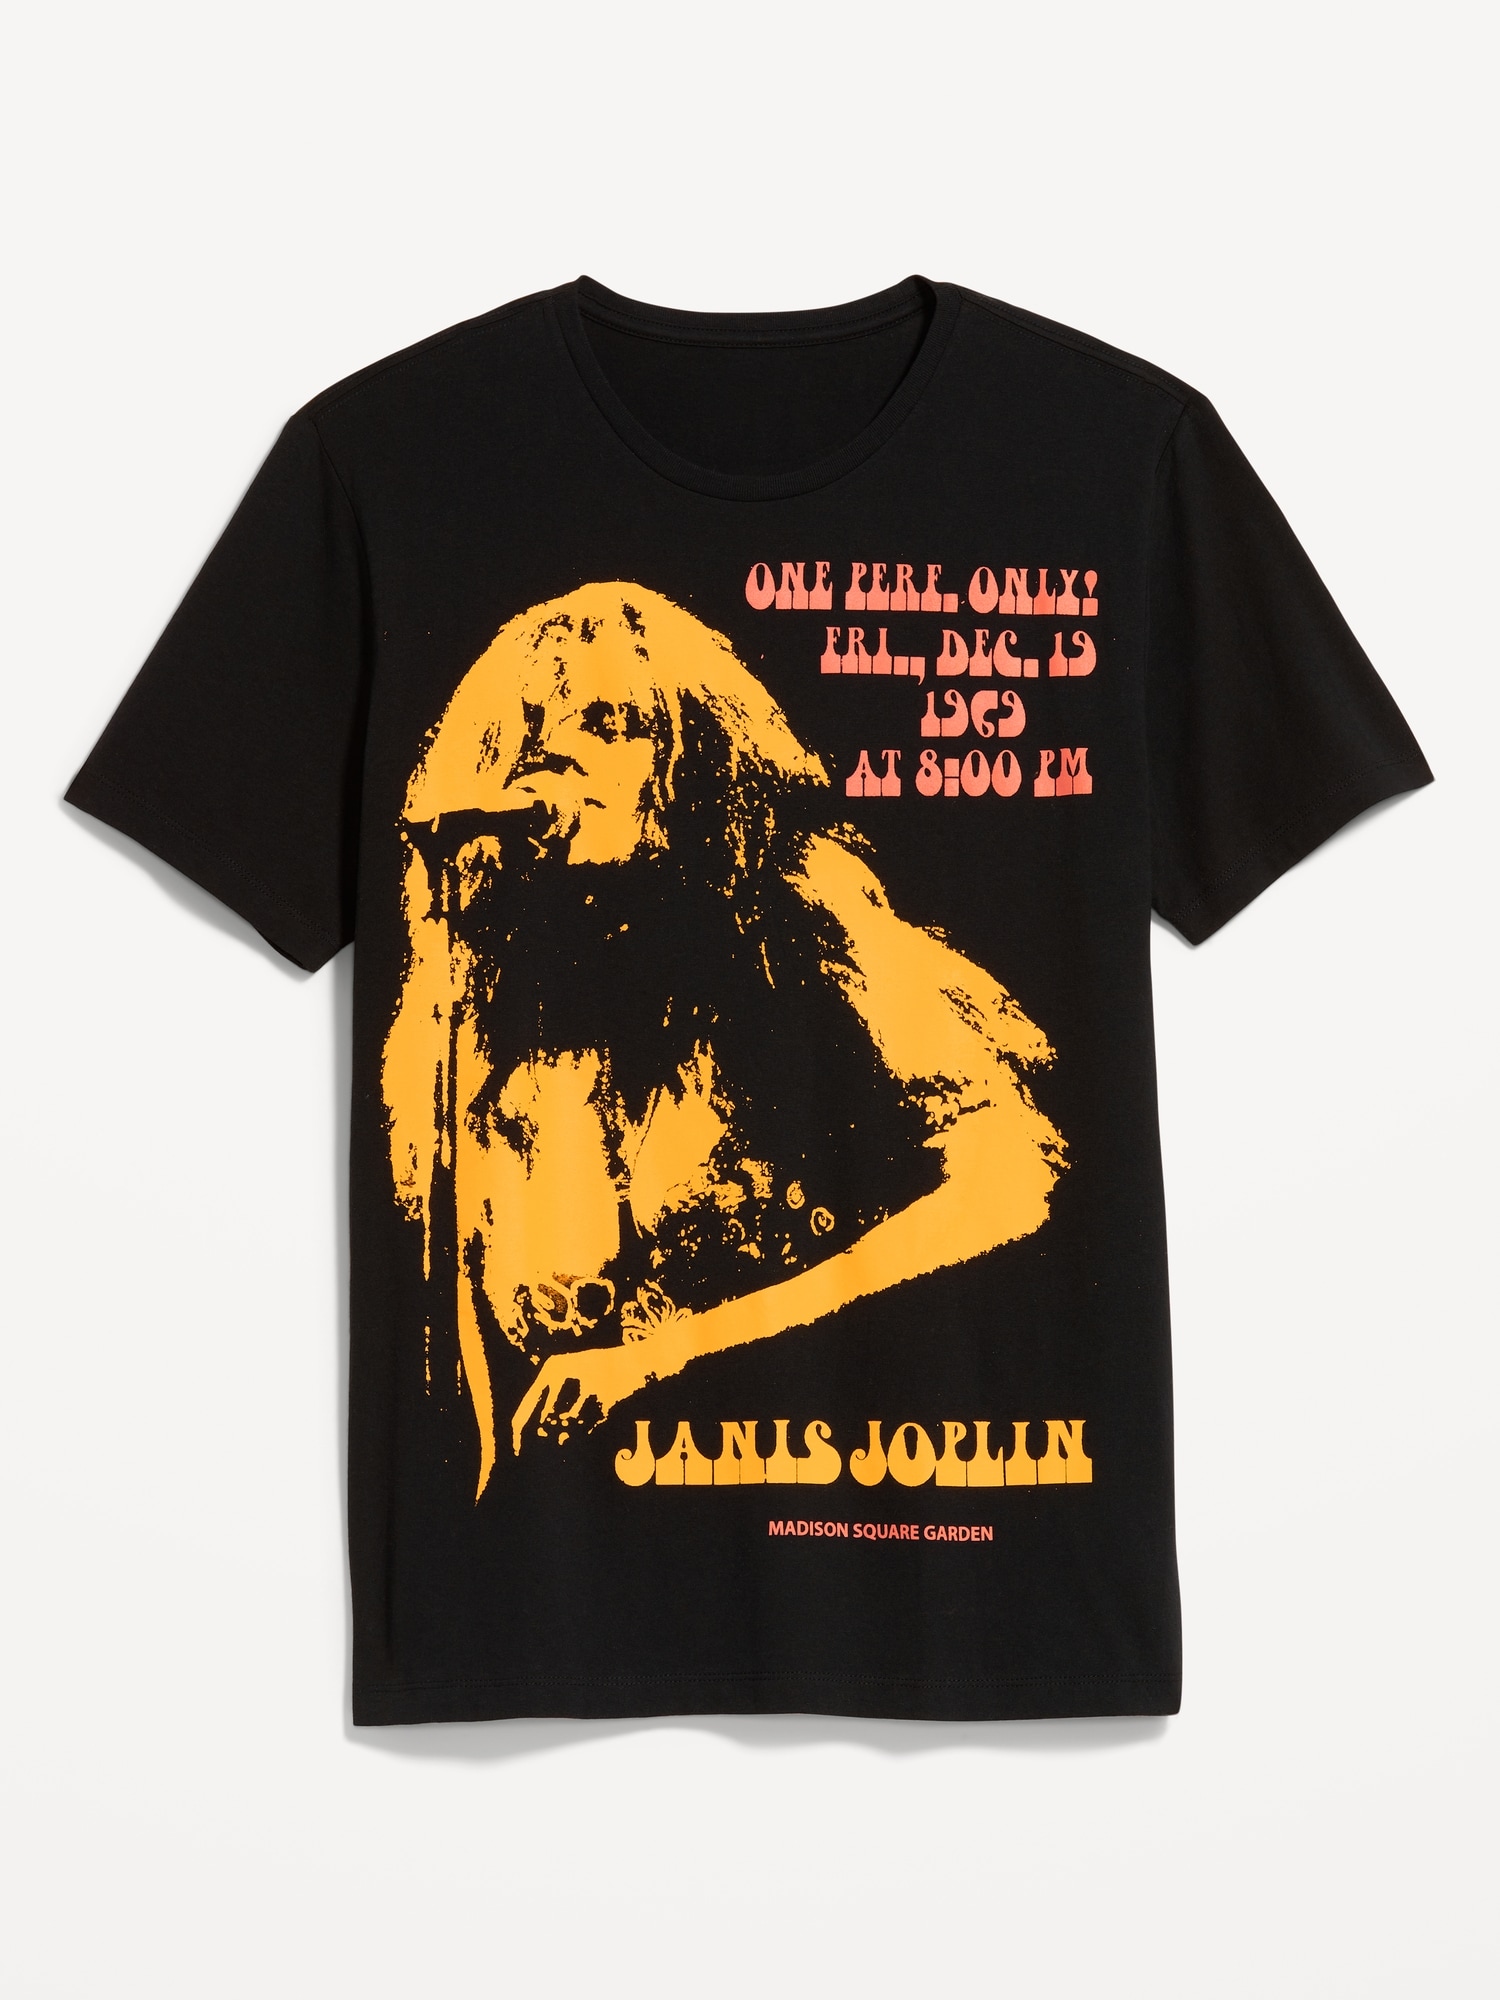 Janis Joplin™ Gender-Neutral T-Shirt for Adults